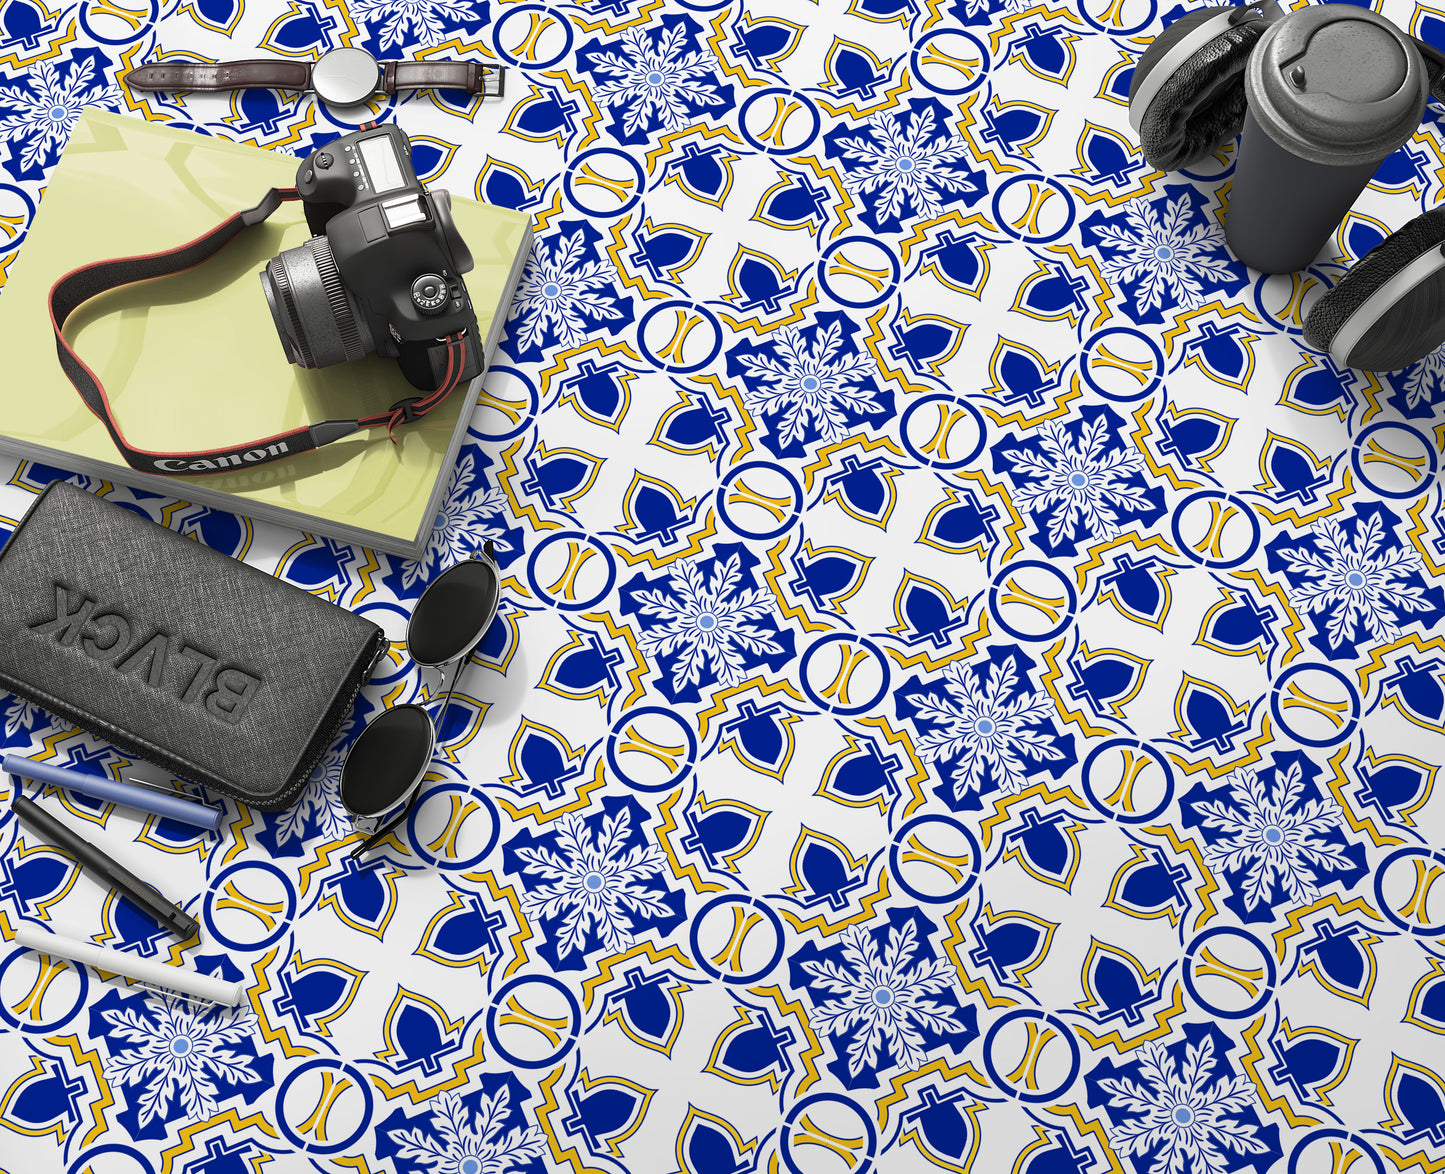 Royal Blue & Yellow Flake Deign Peel & Stick Tile Stickers